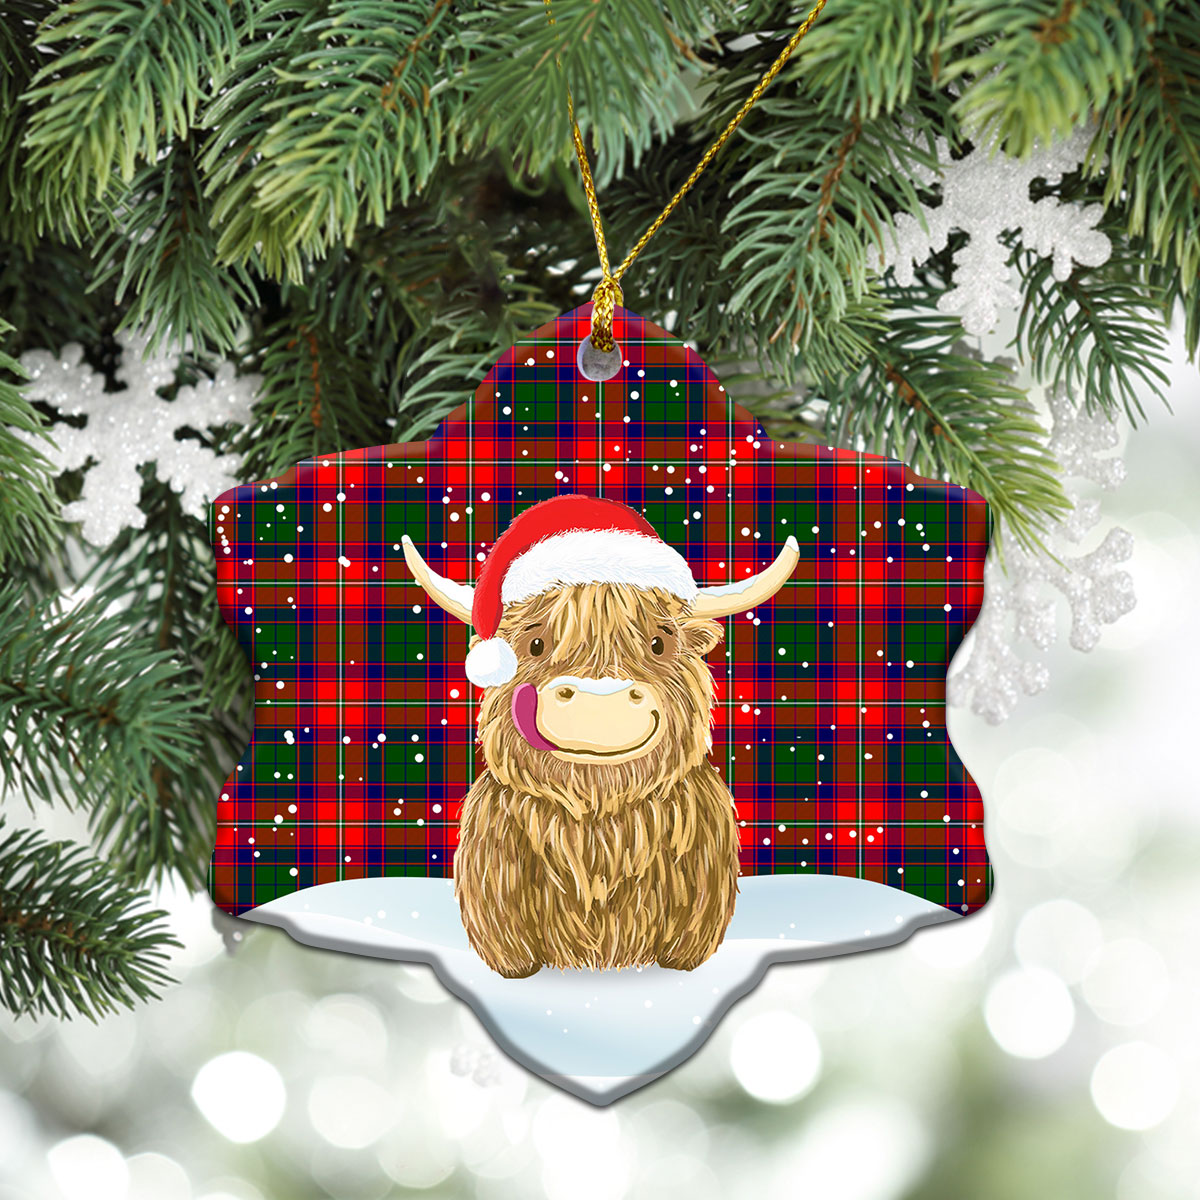 Charteris (Earl of Wemyss) Tartan Christmas Ceramic Ornament - Highland Cows Style